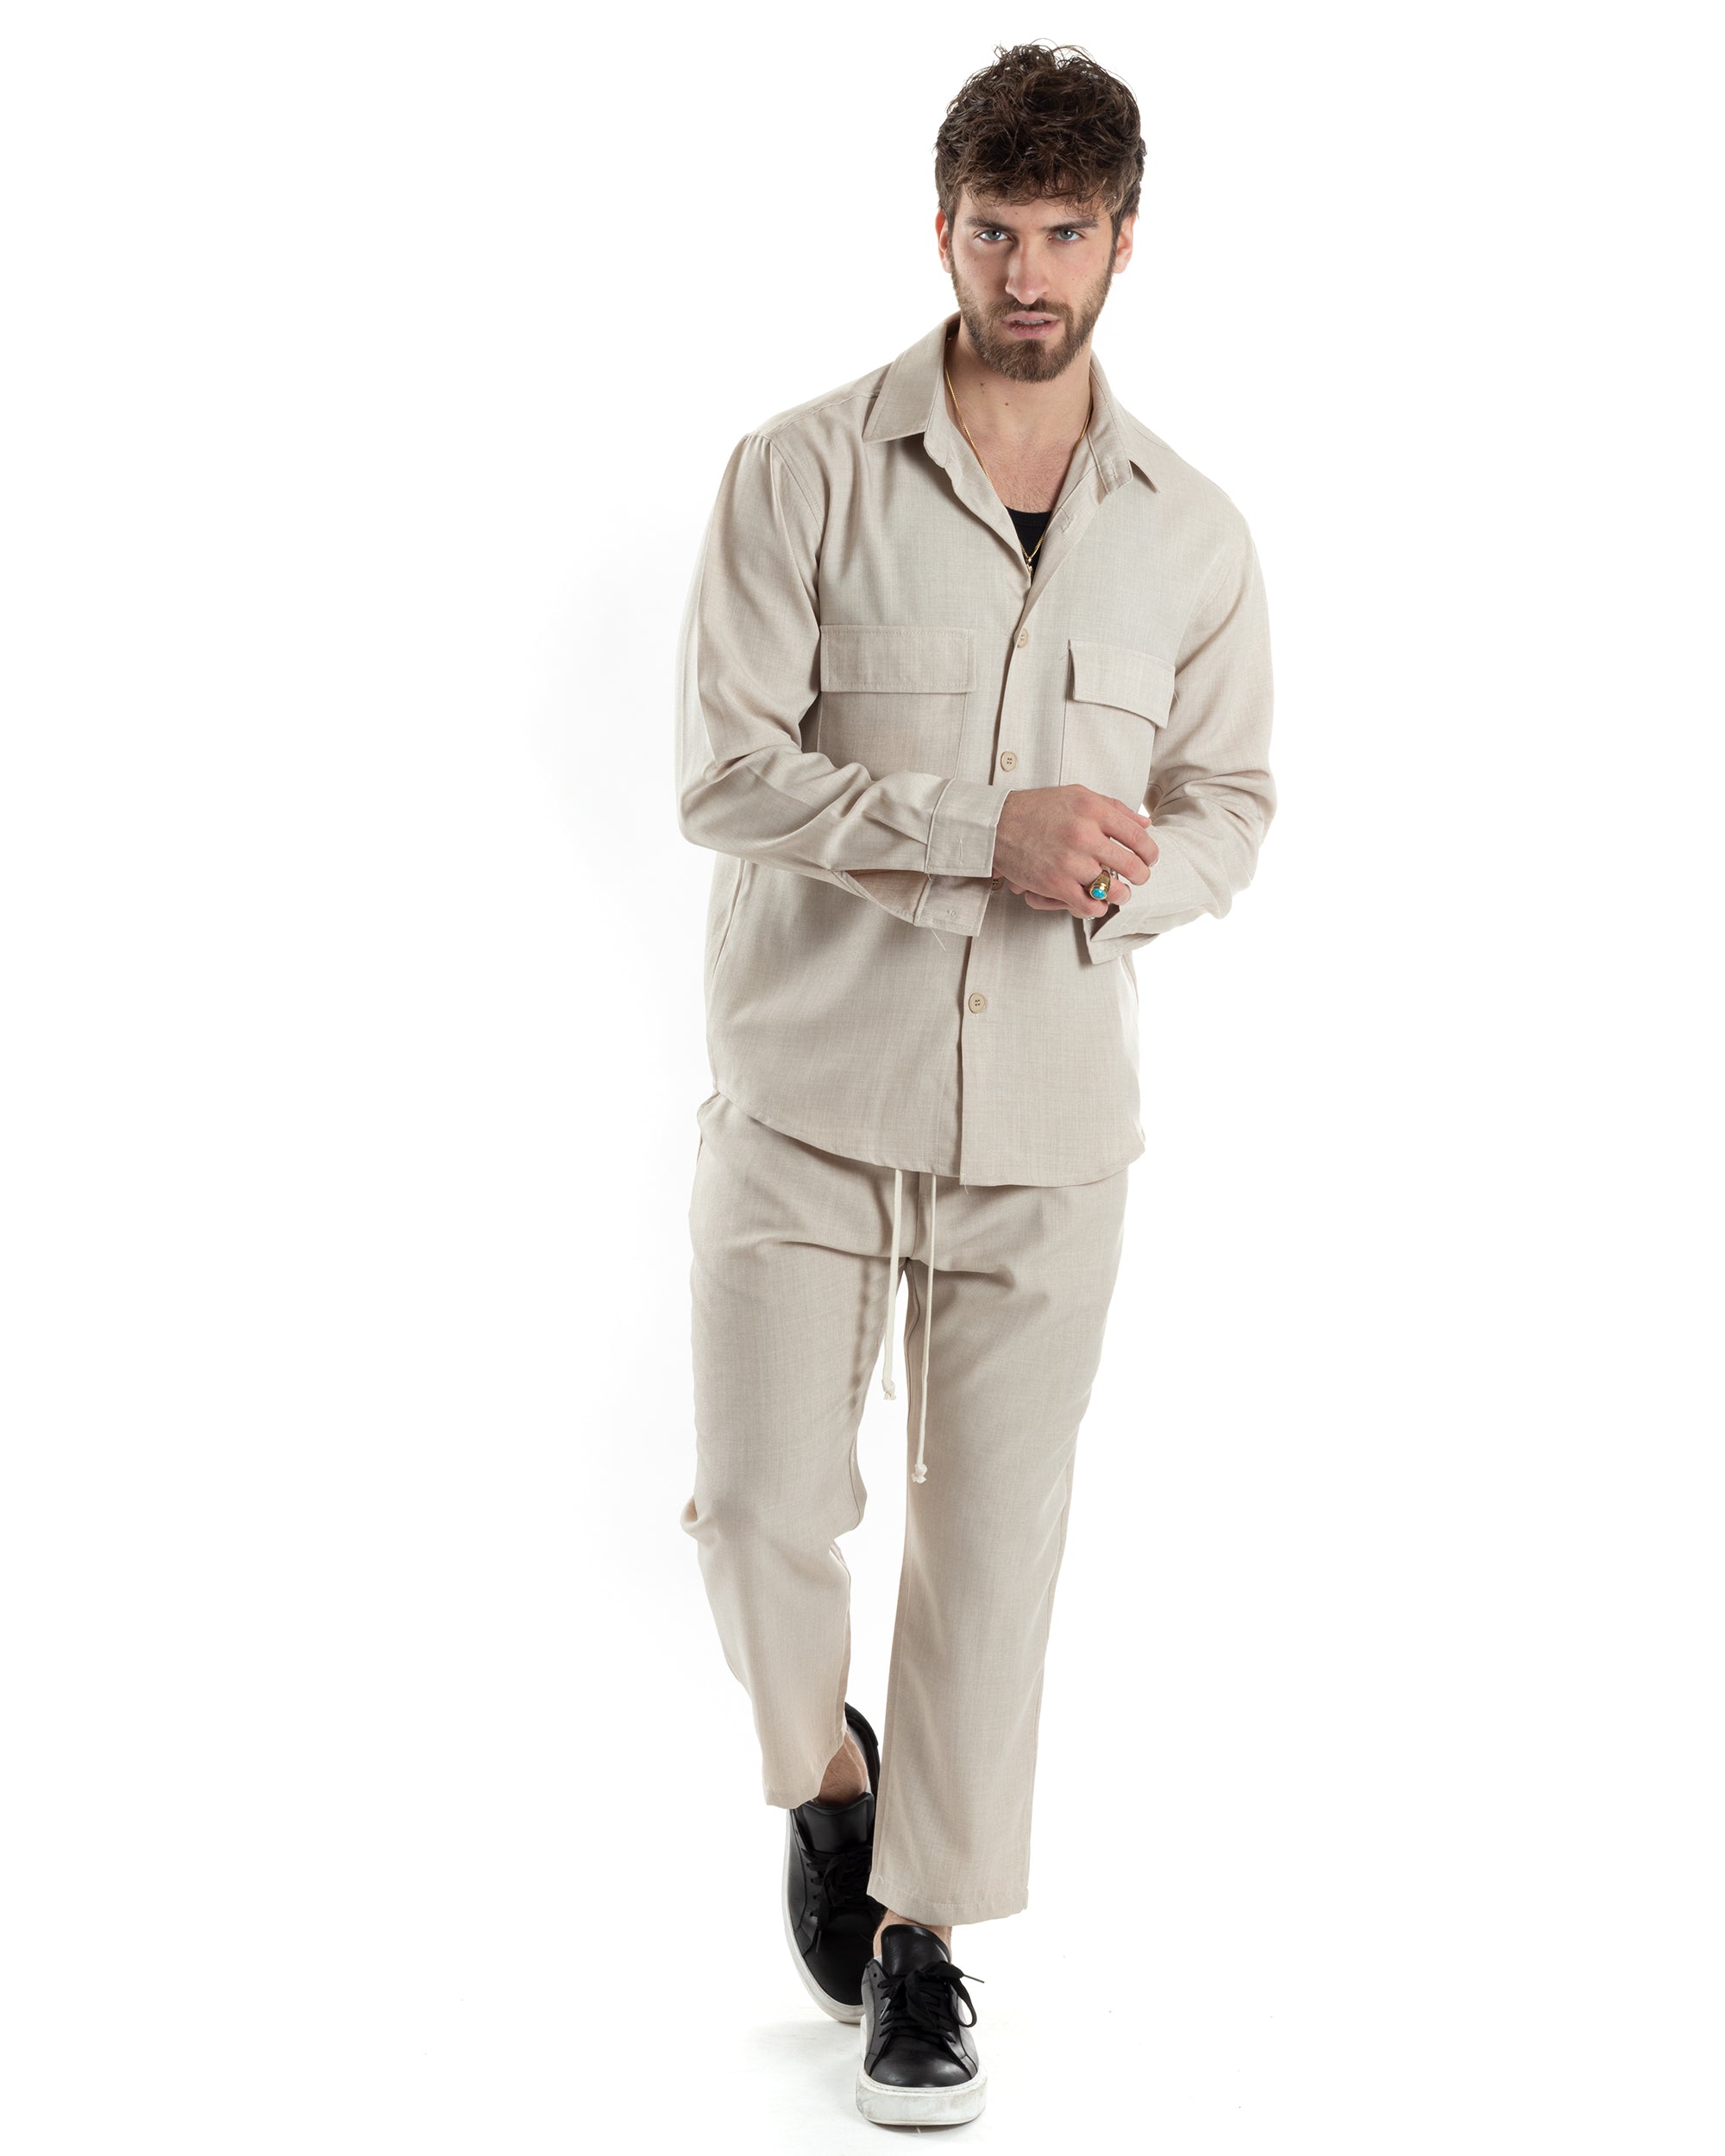 Completo Set Coordinato Uomo Viscosa Camicia Pantaloni Jogger Outfit Melangiato Beige GIOSAL-OU2453A